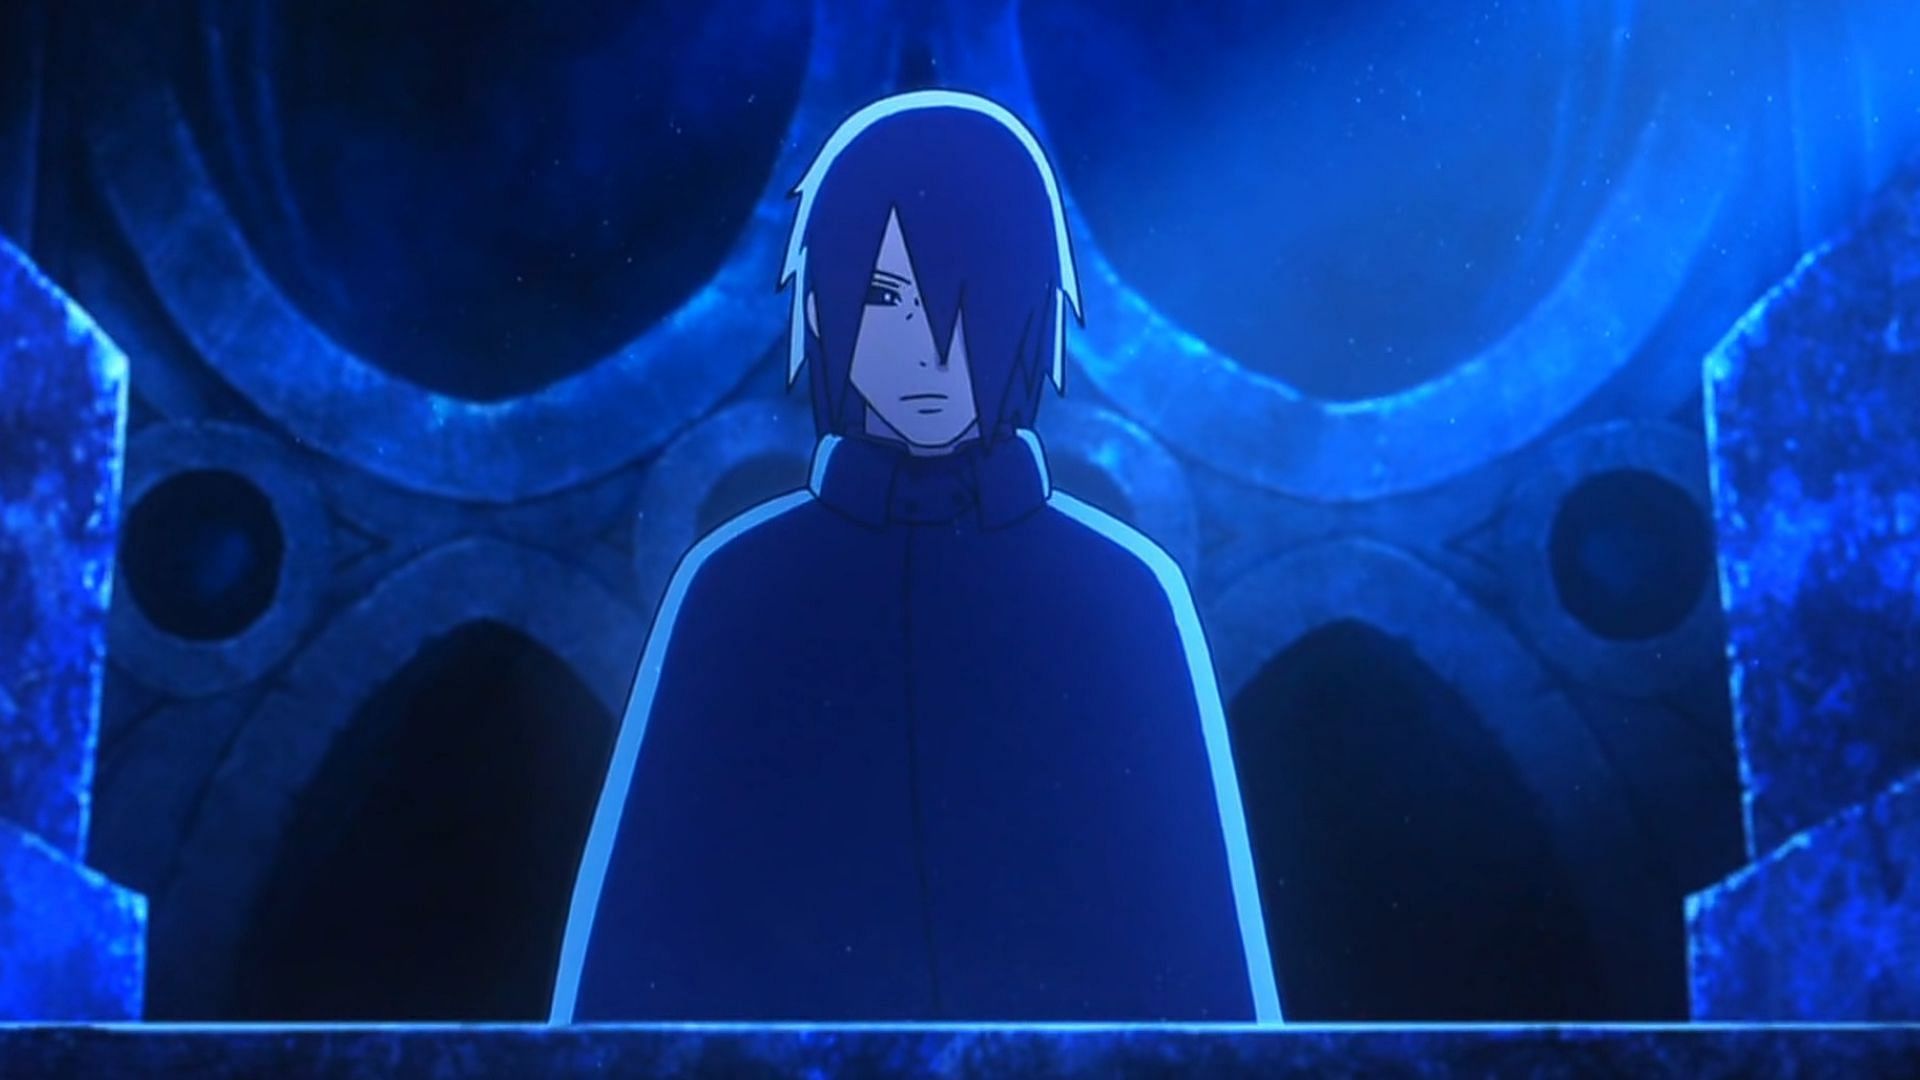 Sasuke as seen in the anime (Image via Studio Pierrot)